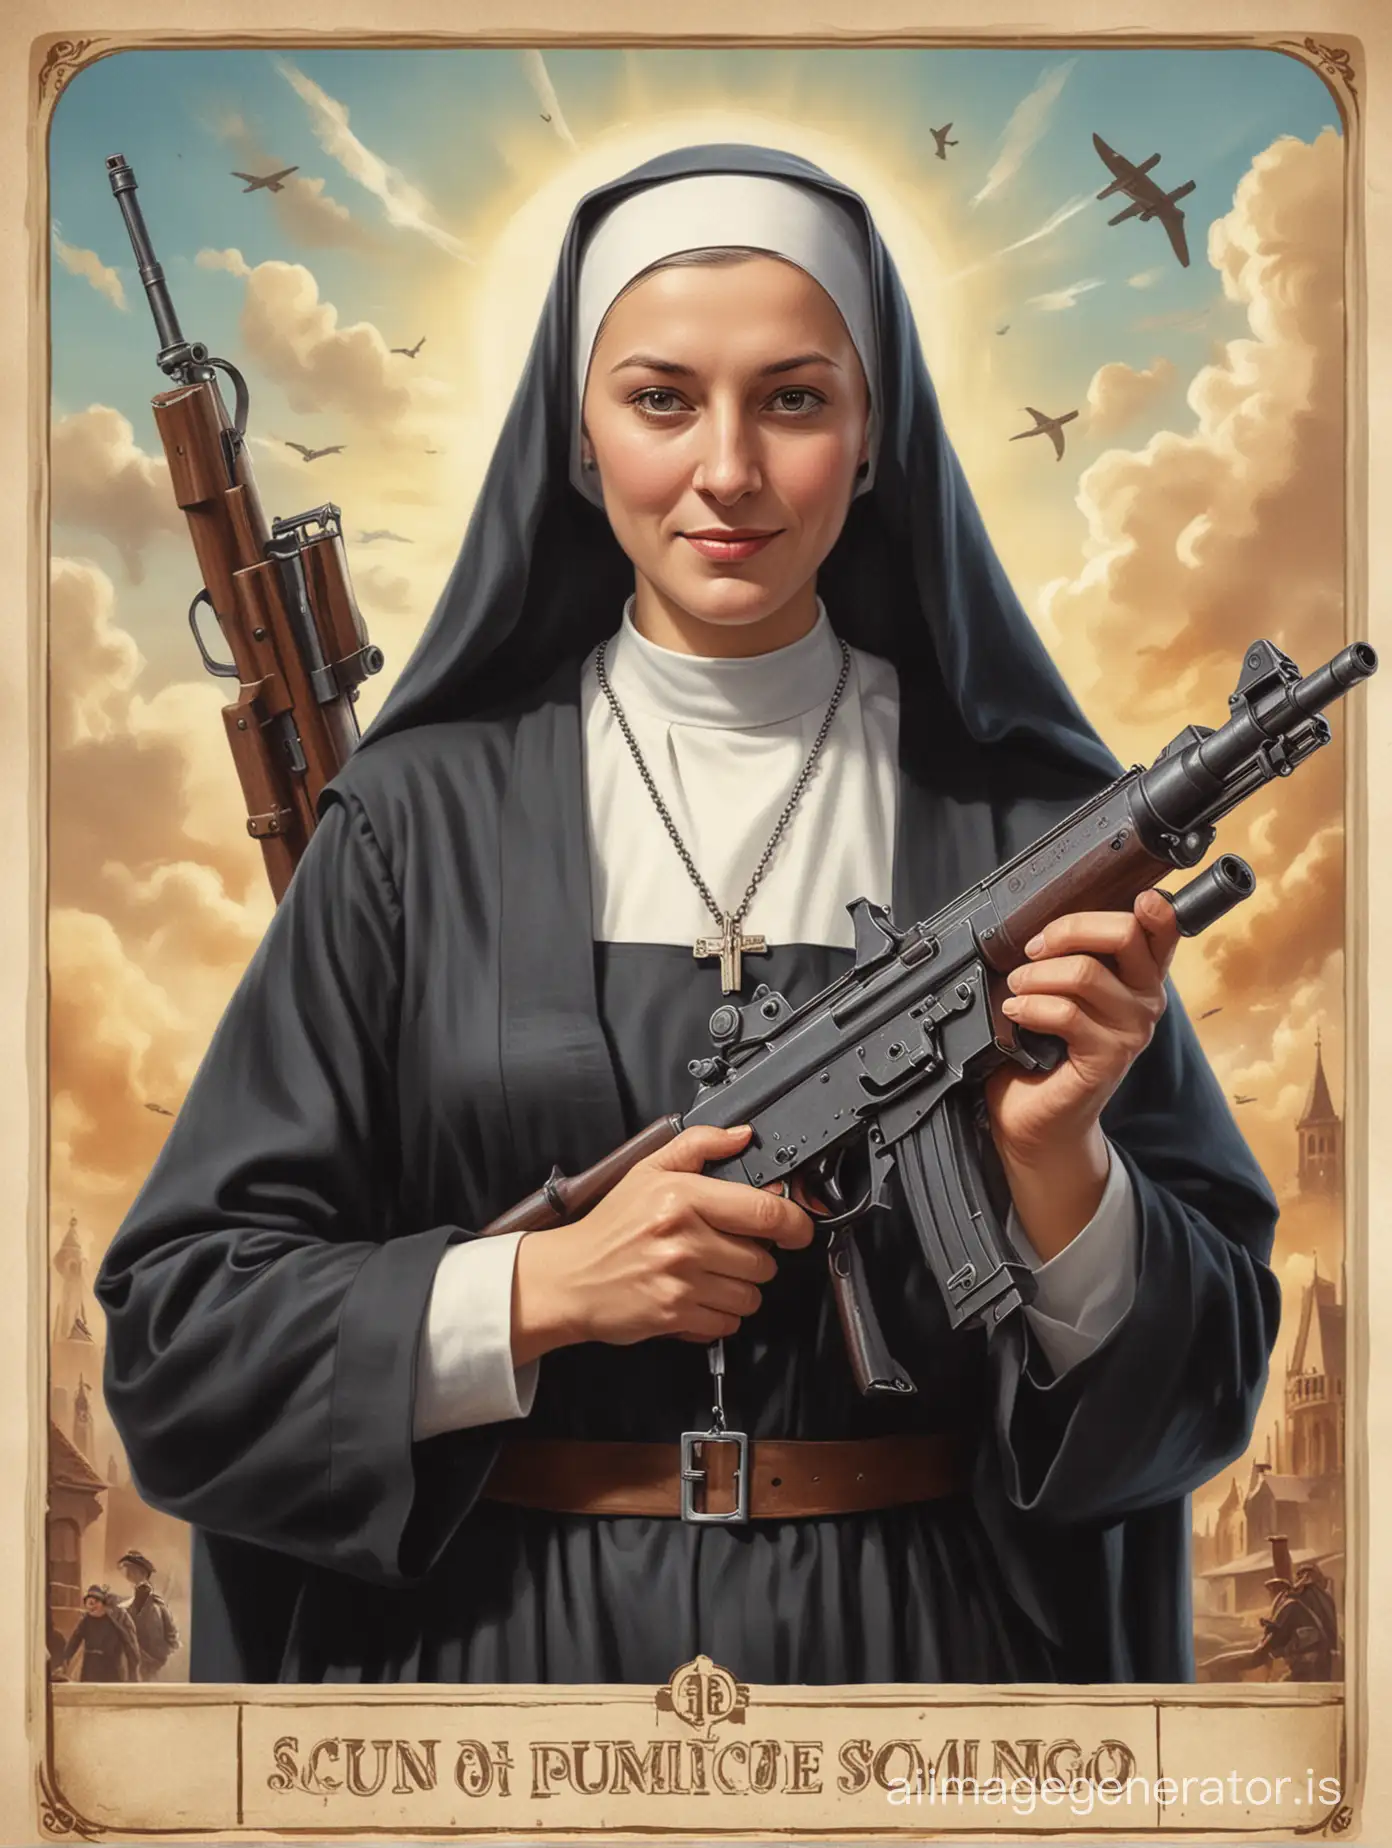 create a board game card depicting a nun holding a submachine gun in 1940